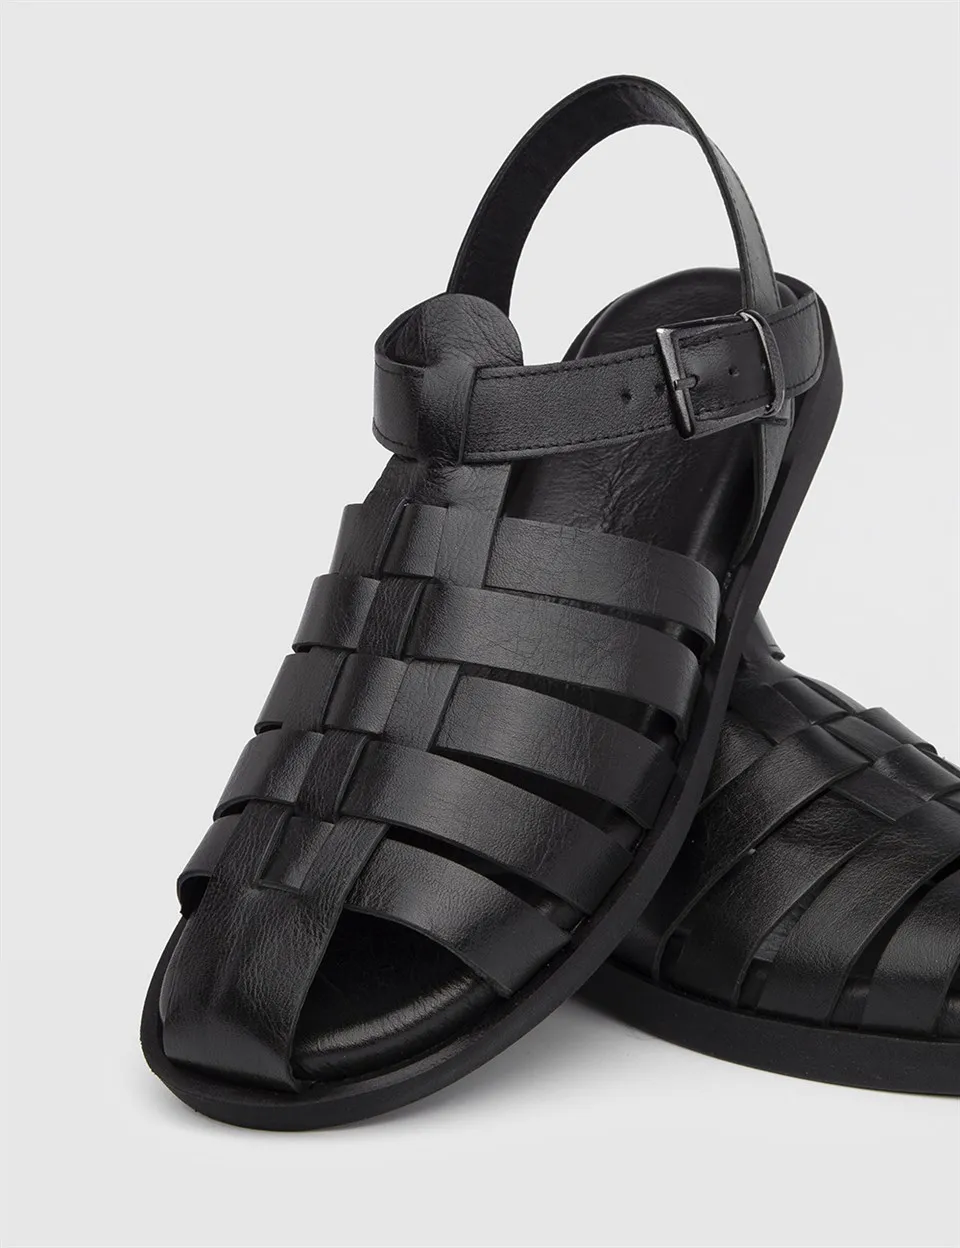 

ILVi-Genuine Leather Handmade Timpu Black Leather Men's Sandal Men Shoes 2022 Spring/Summer